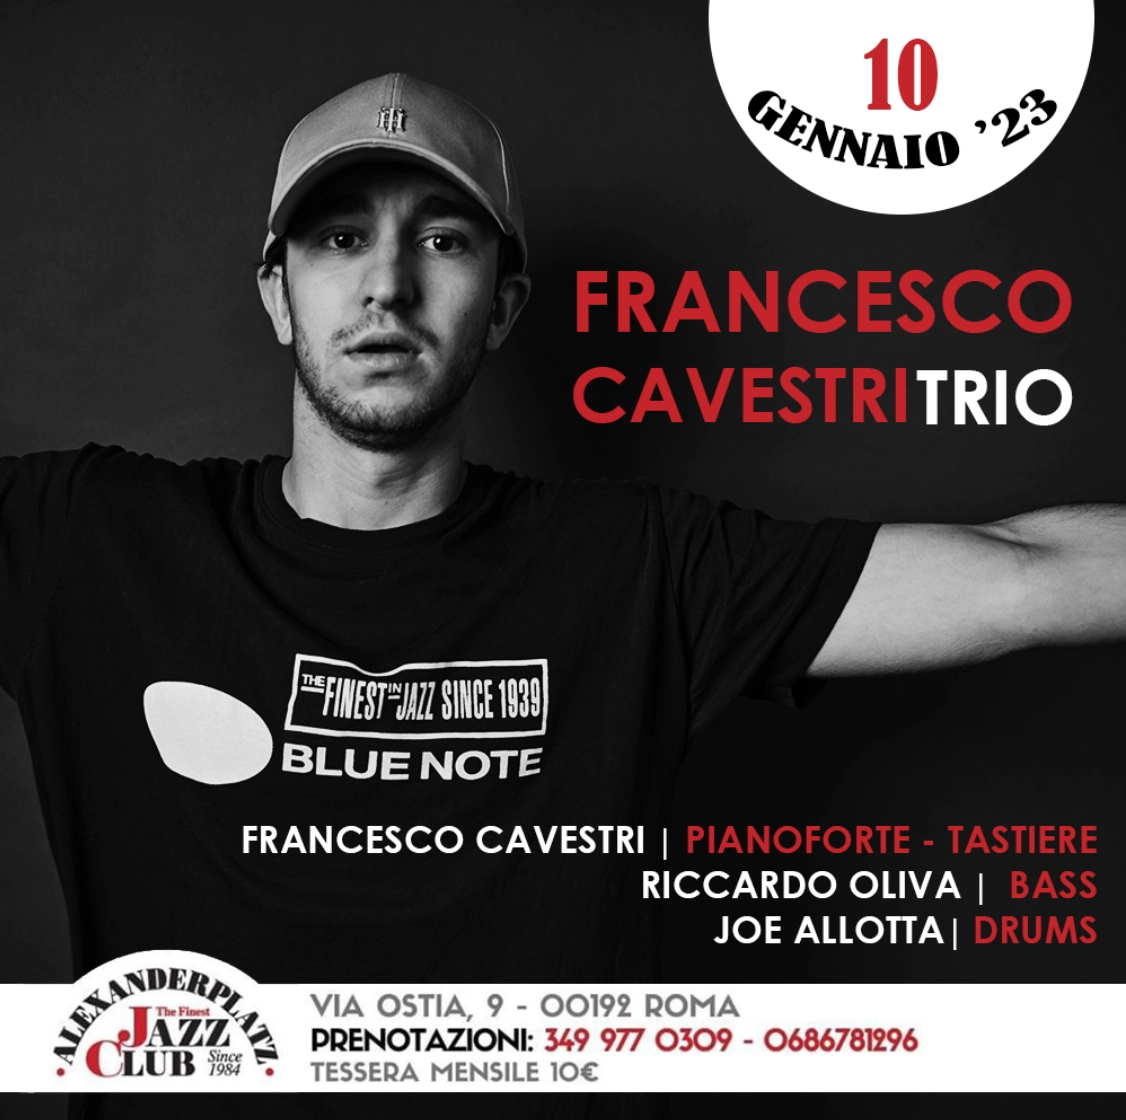 Foto 1 - FRANCESCO CAVESTRI TRIO live martedì 10 gennaio 2023 all'Alexanderplatz Jazz Club di Roma